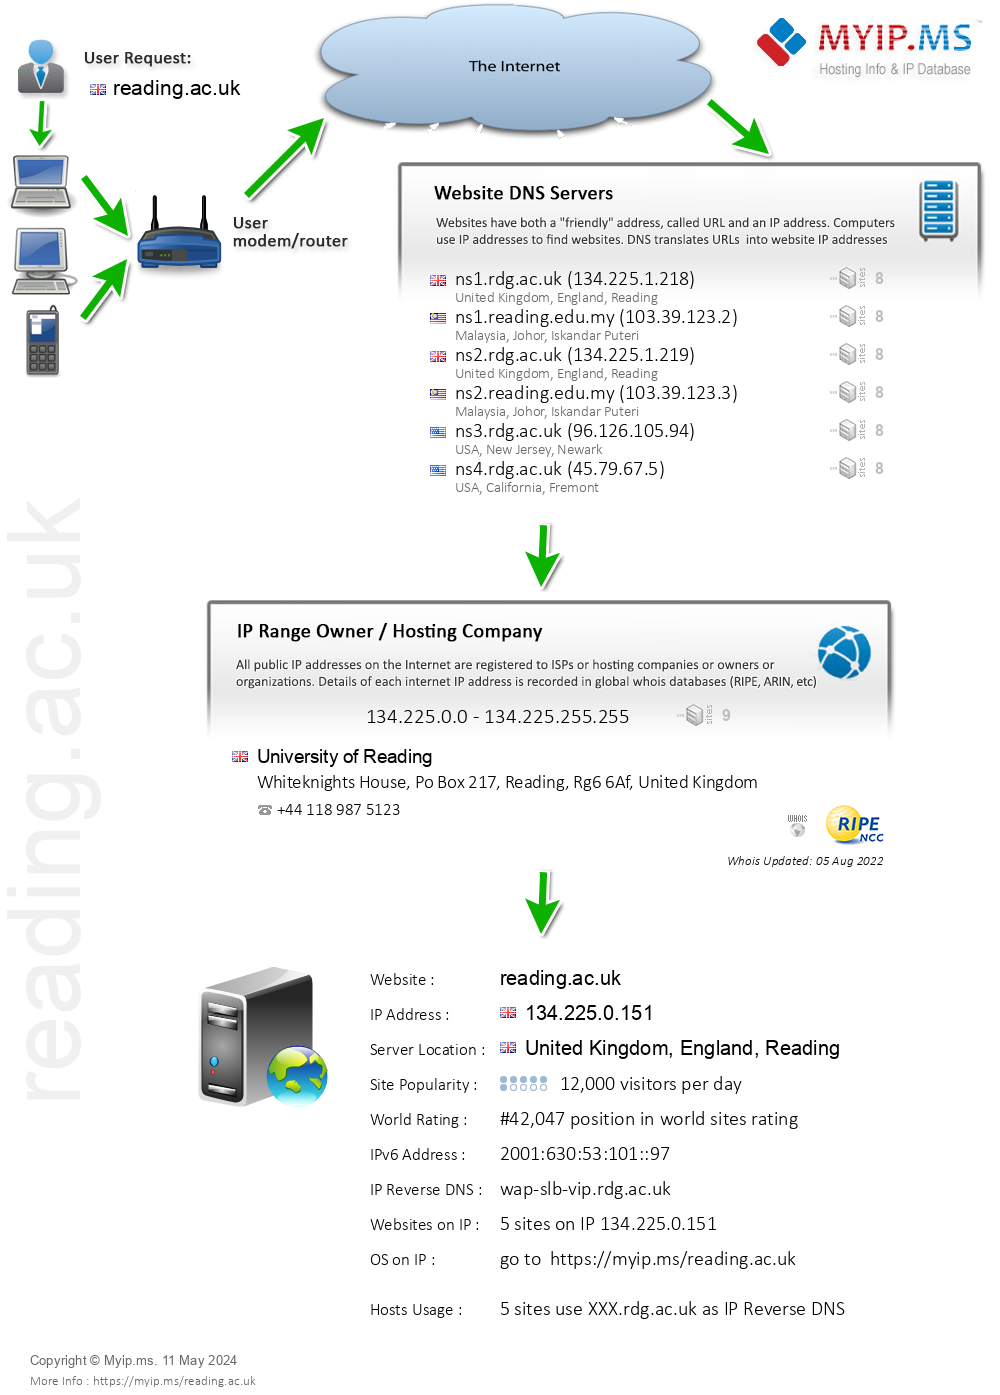 Reading.ac.uk - Website Hosting Visual IP Diagram